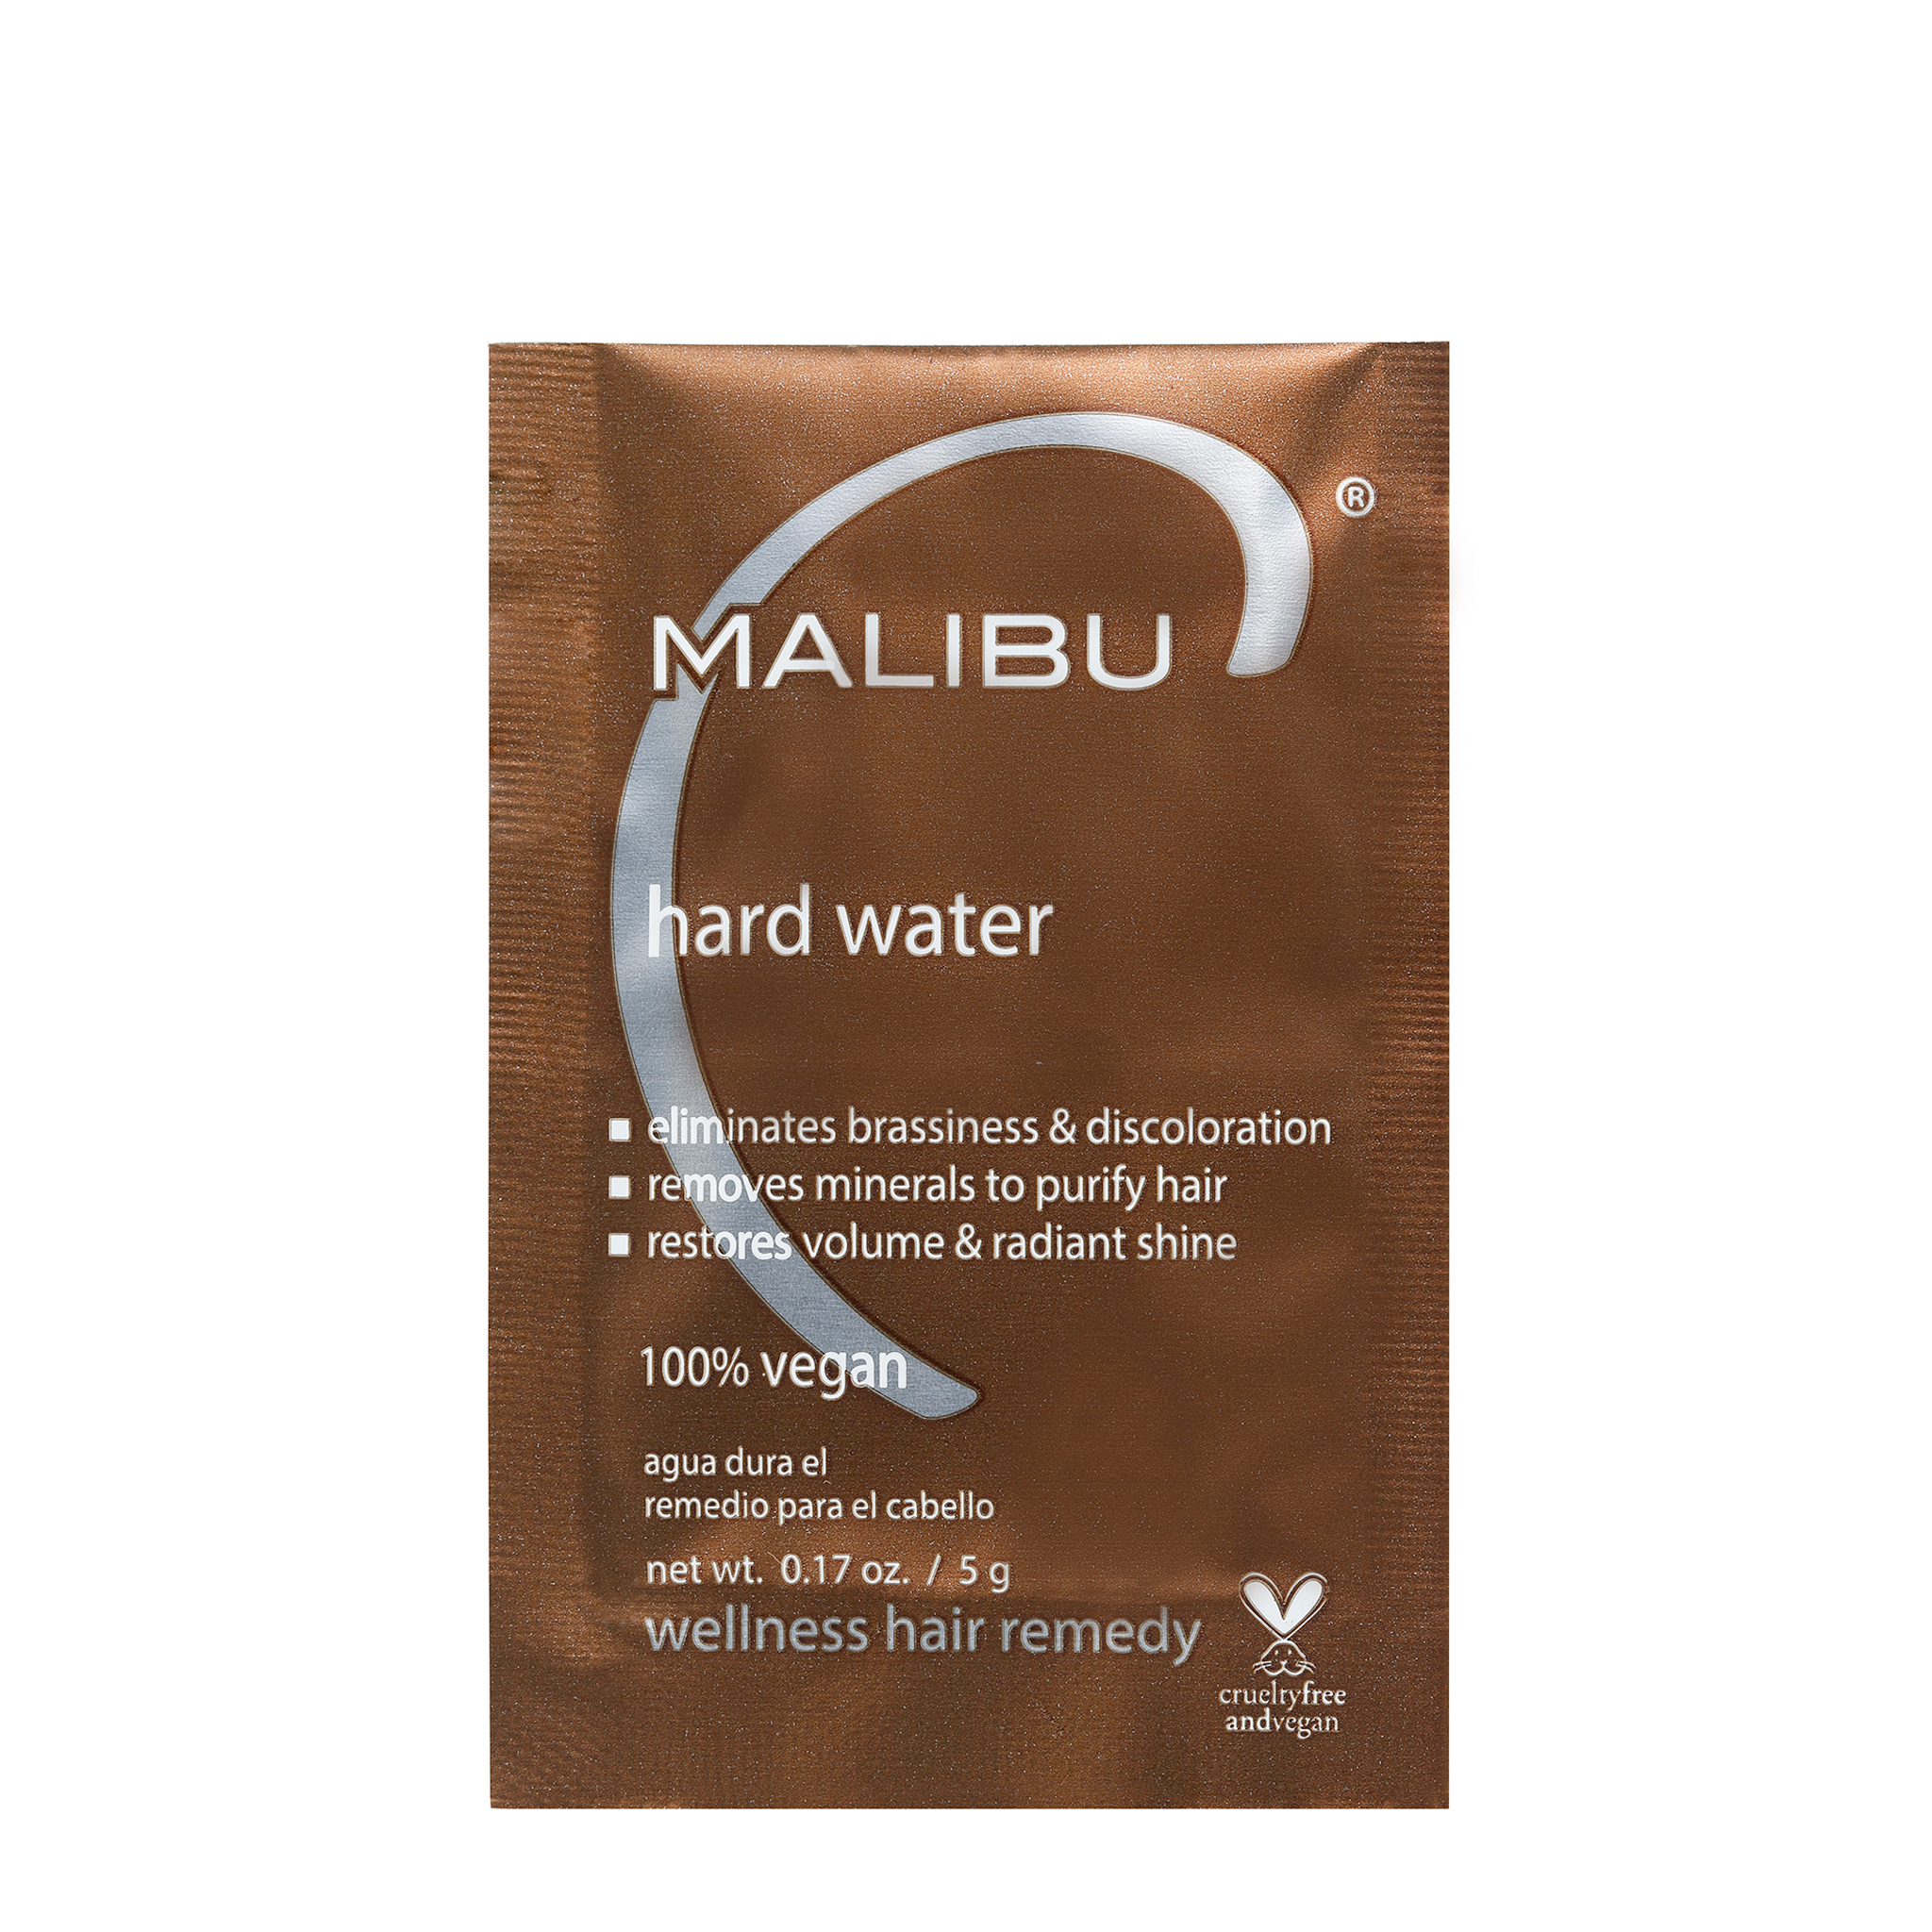 Malibu C Hard Water Wellness Remedy